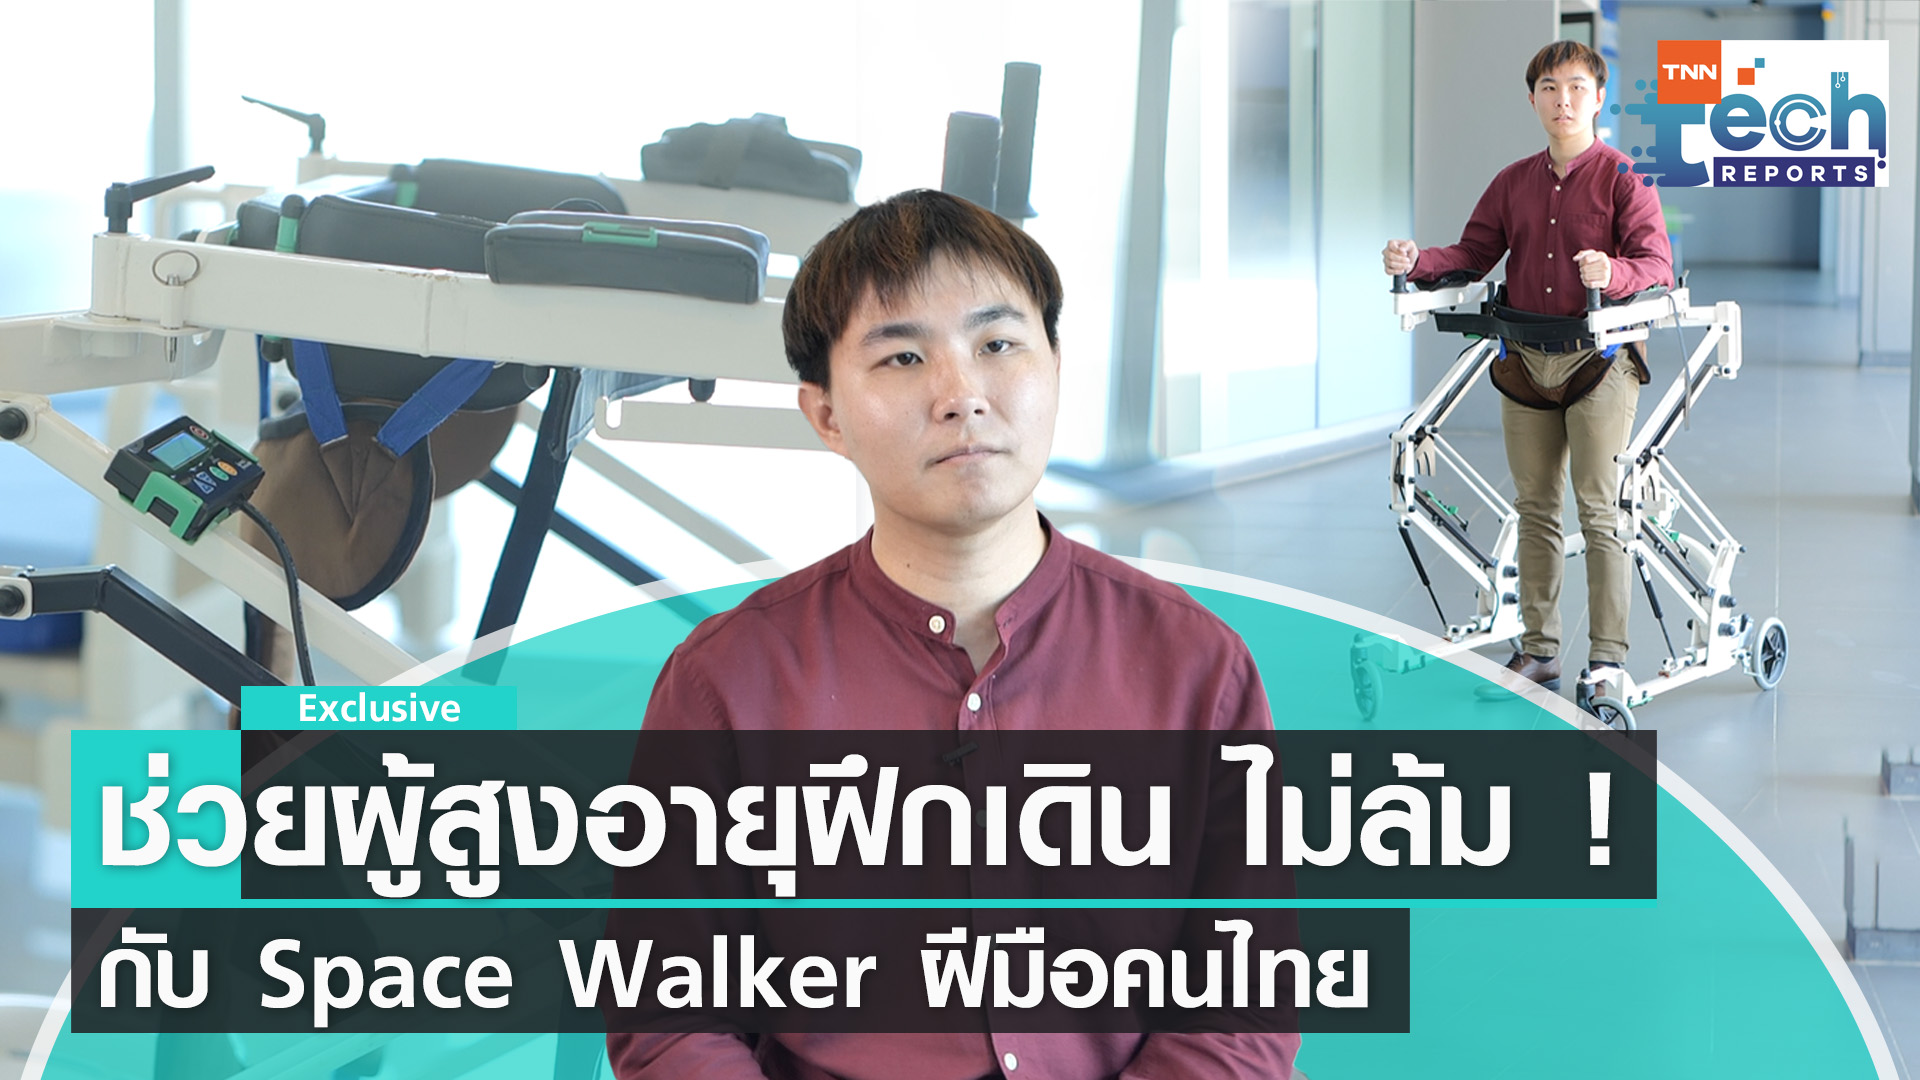 Space Walker นวัตกรรมช่วยฝึกเดินฝีมือคนไทย จากงานวิจัยสู่ผลิตภัณฑ์ในท้องตลาด | TNN Tech Reports